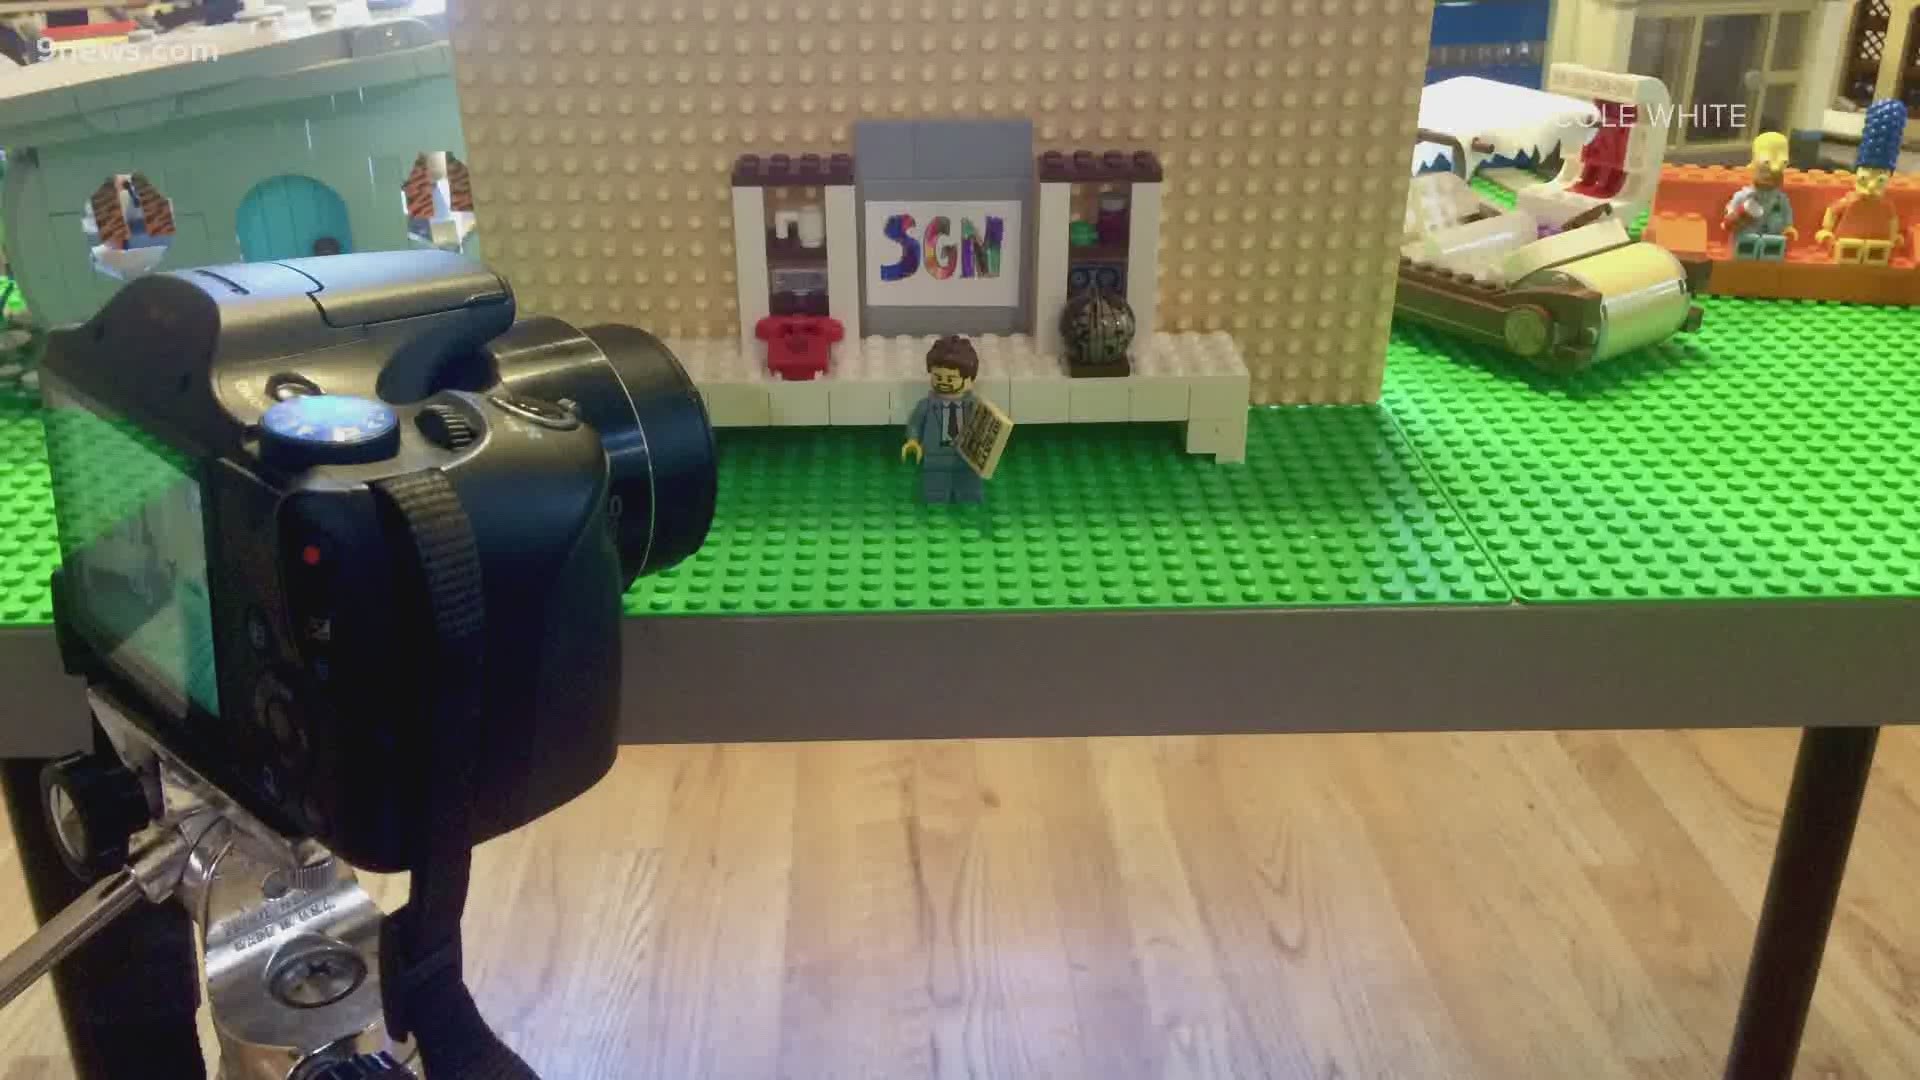 Actor John Krasinski's popular good news web featured the boys' LEGO stop-motion clip.